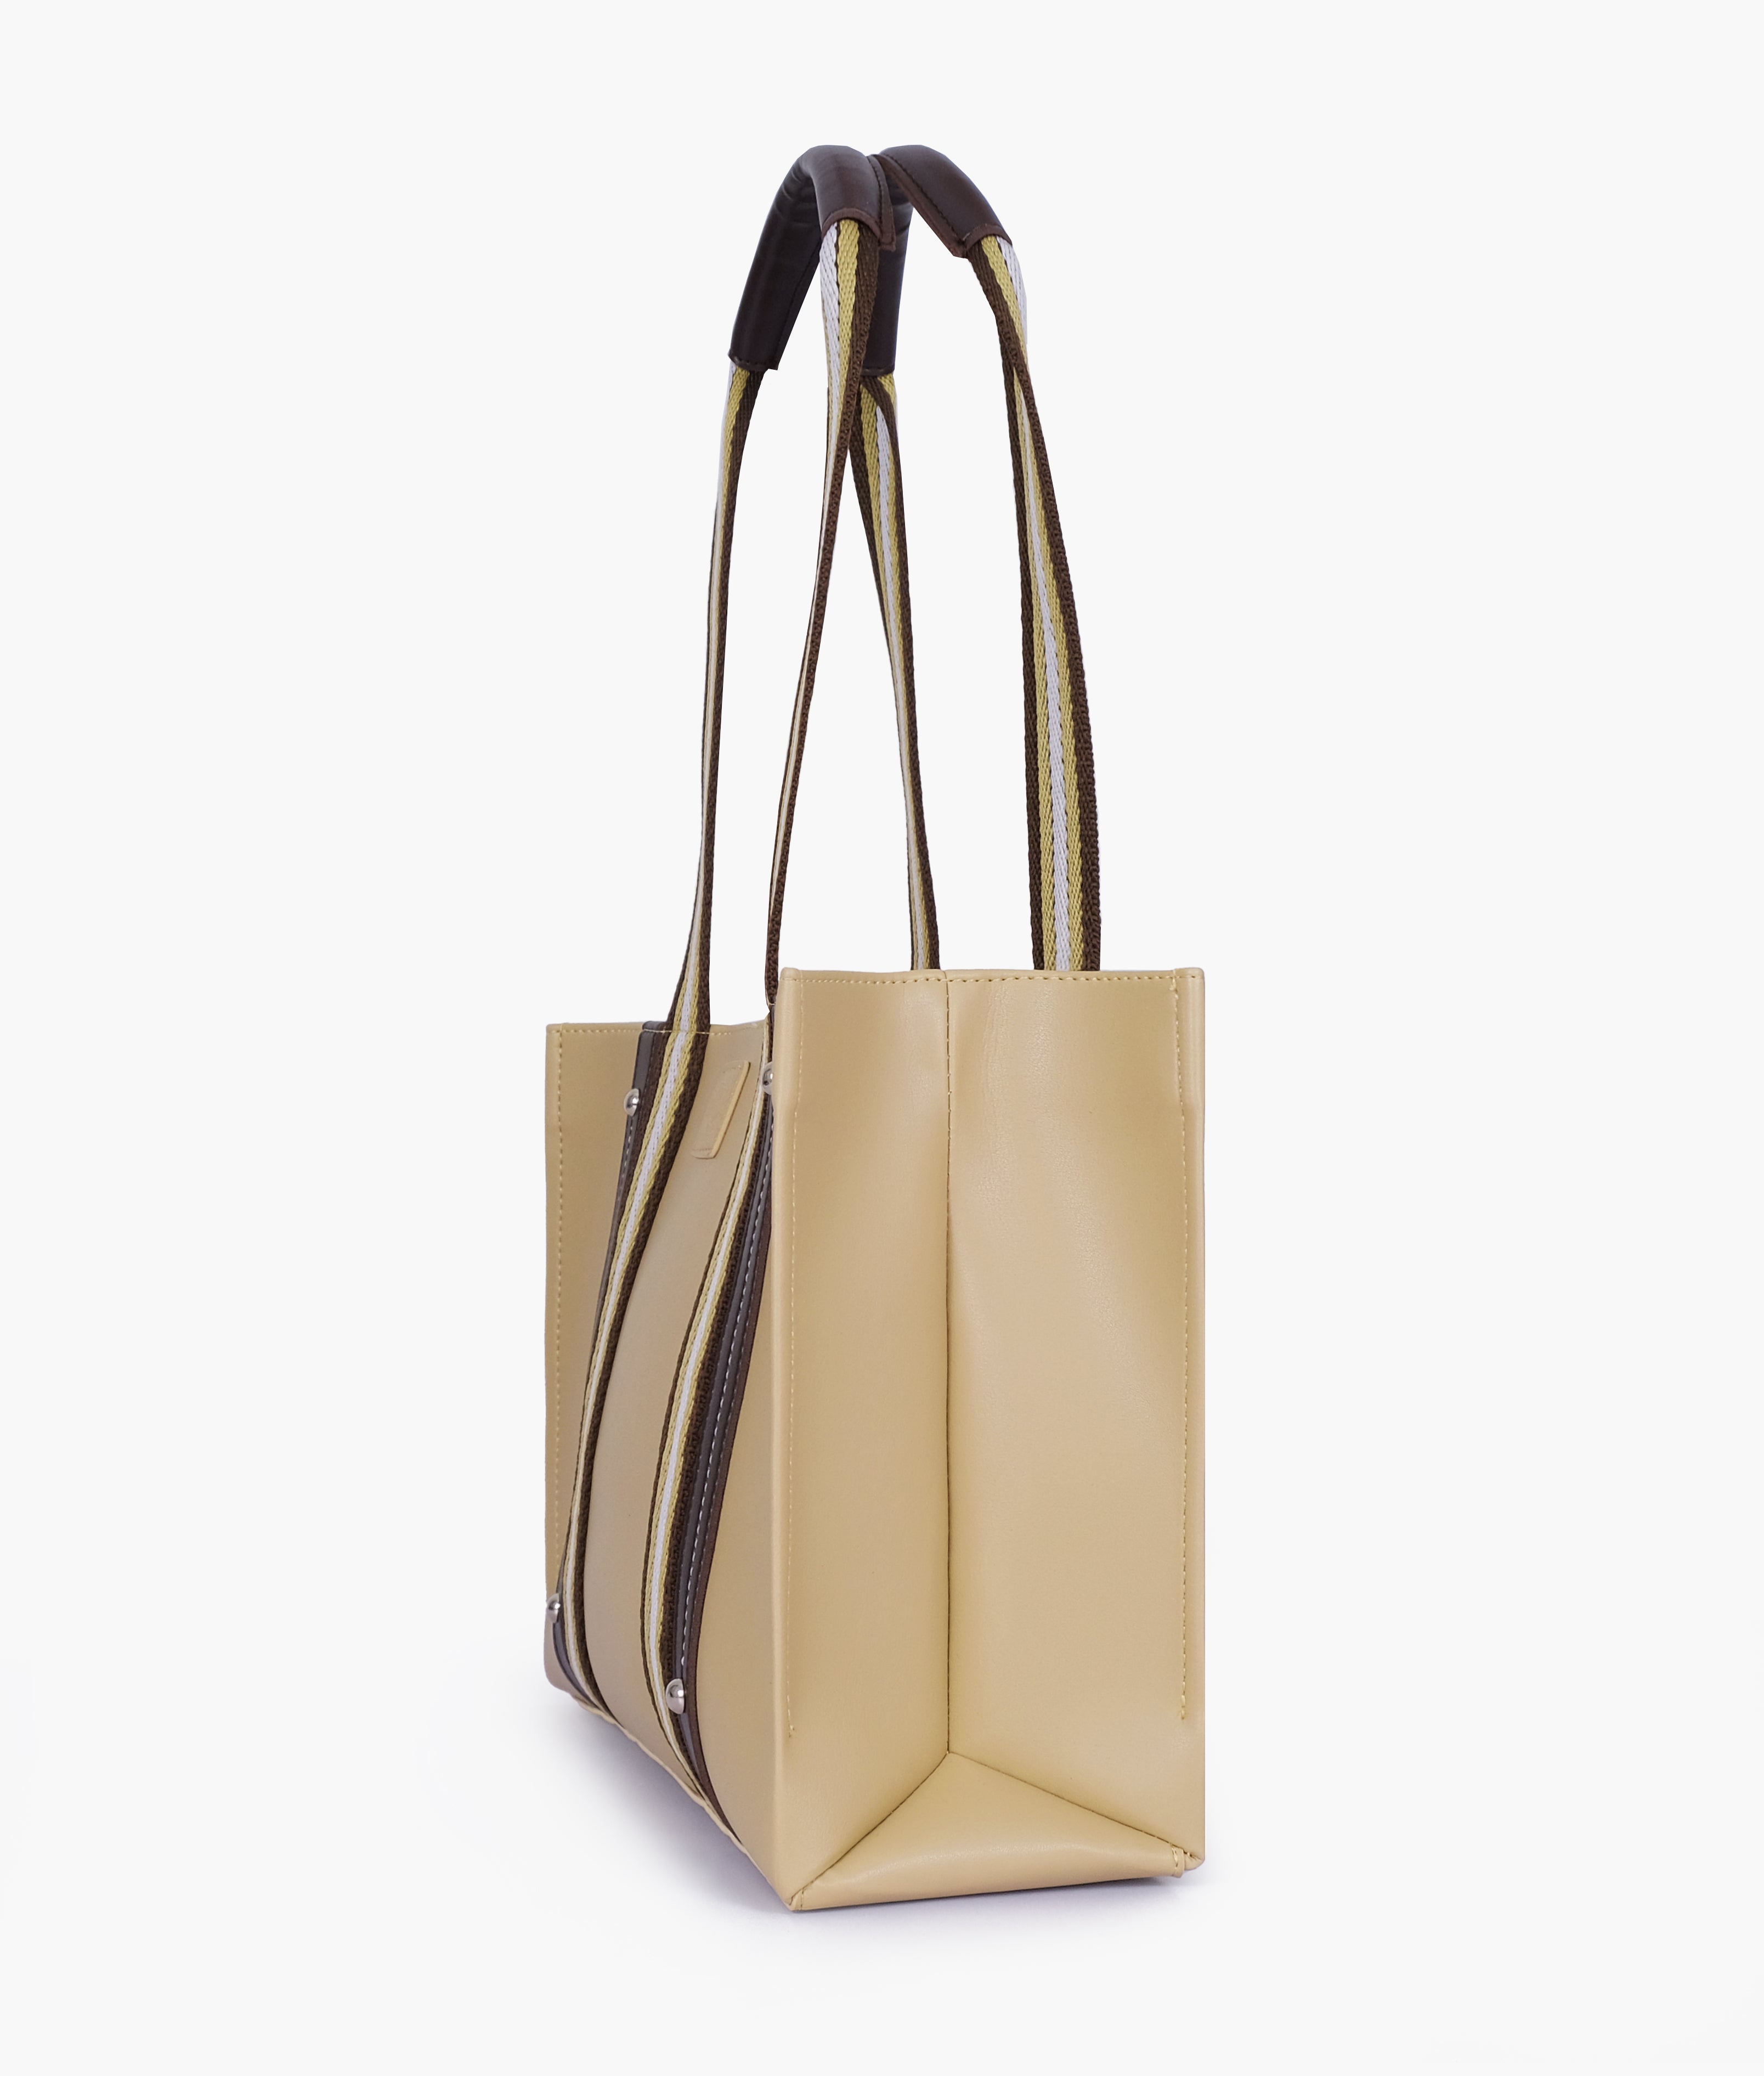 Off-white long strap tote bag